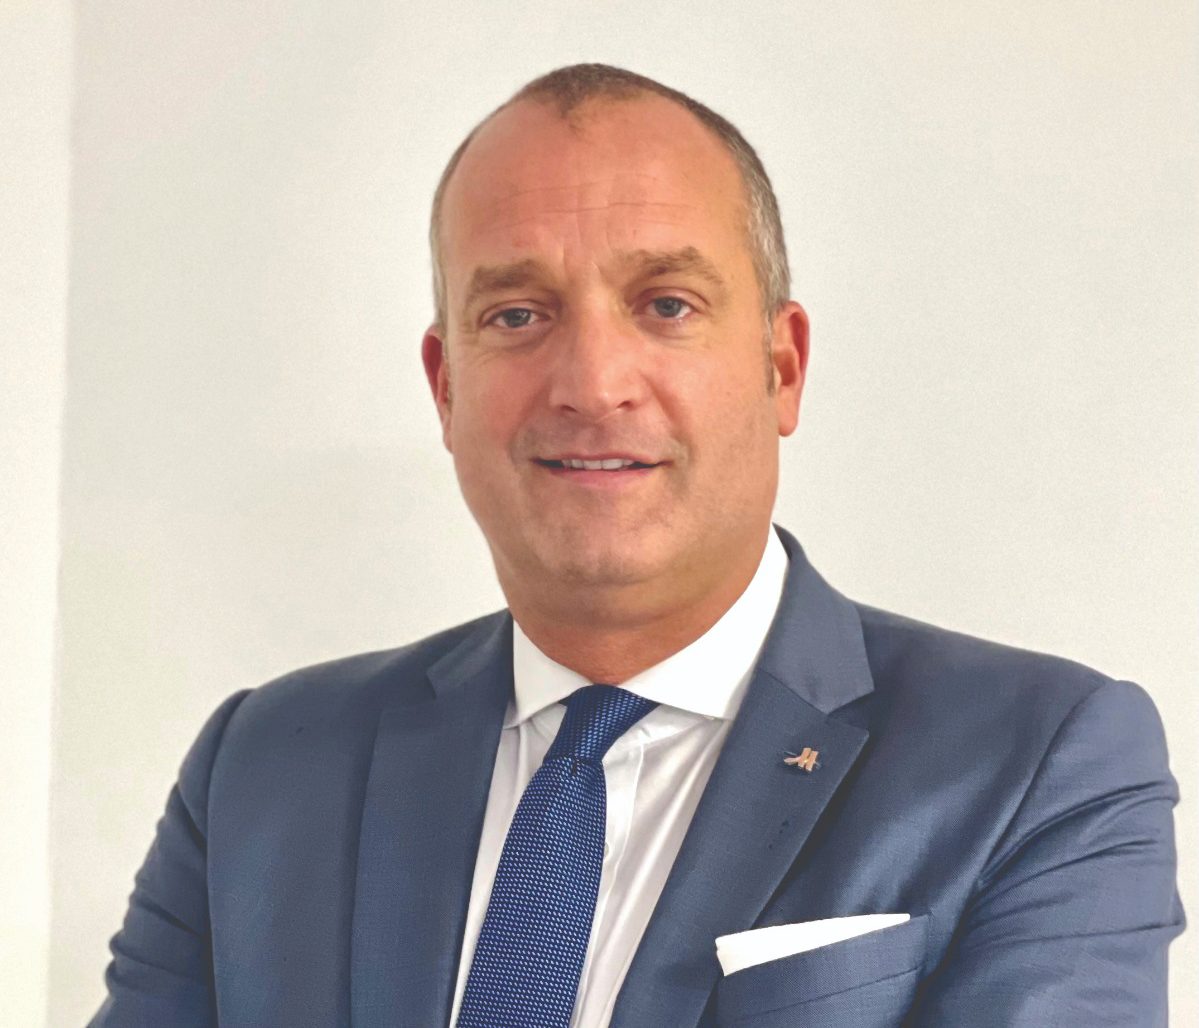 Alexander A. Incorvaja, General Manager at Malta Marriott Hotel & Spa